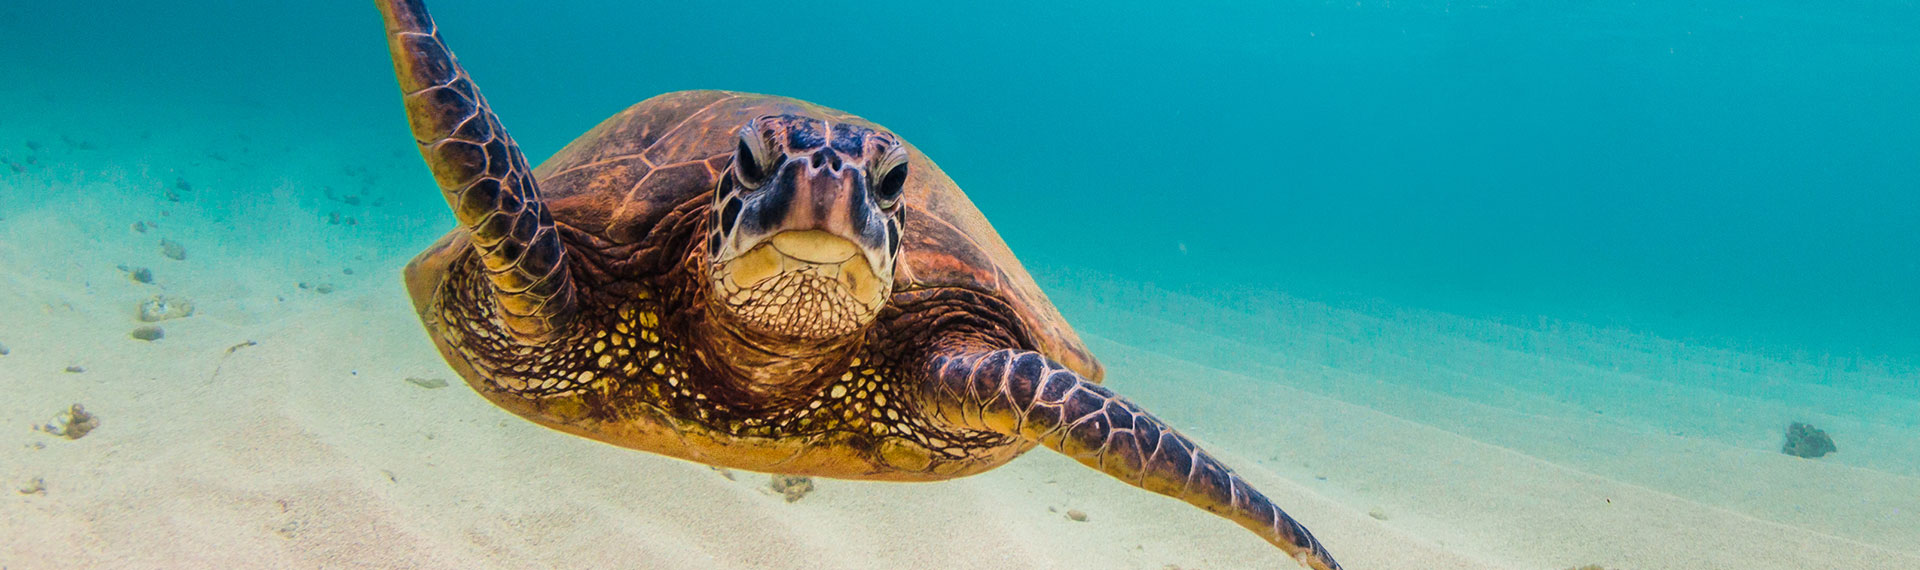 Sea turtle in the Caribbean